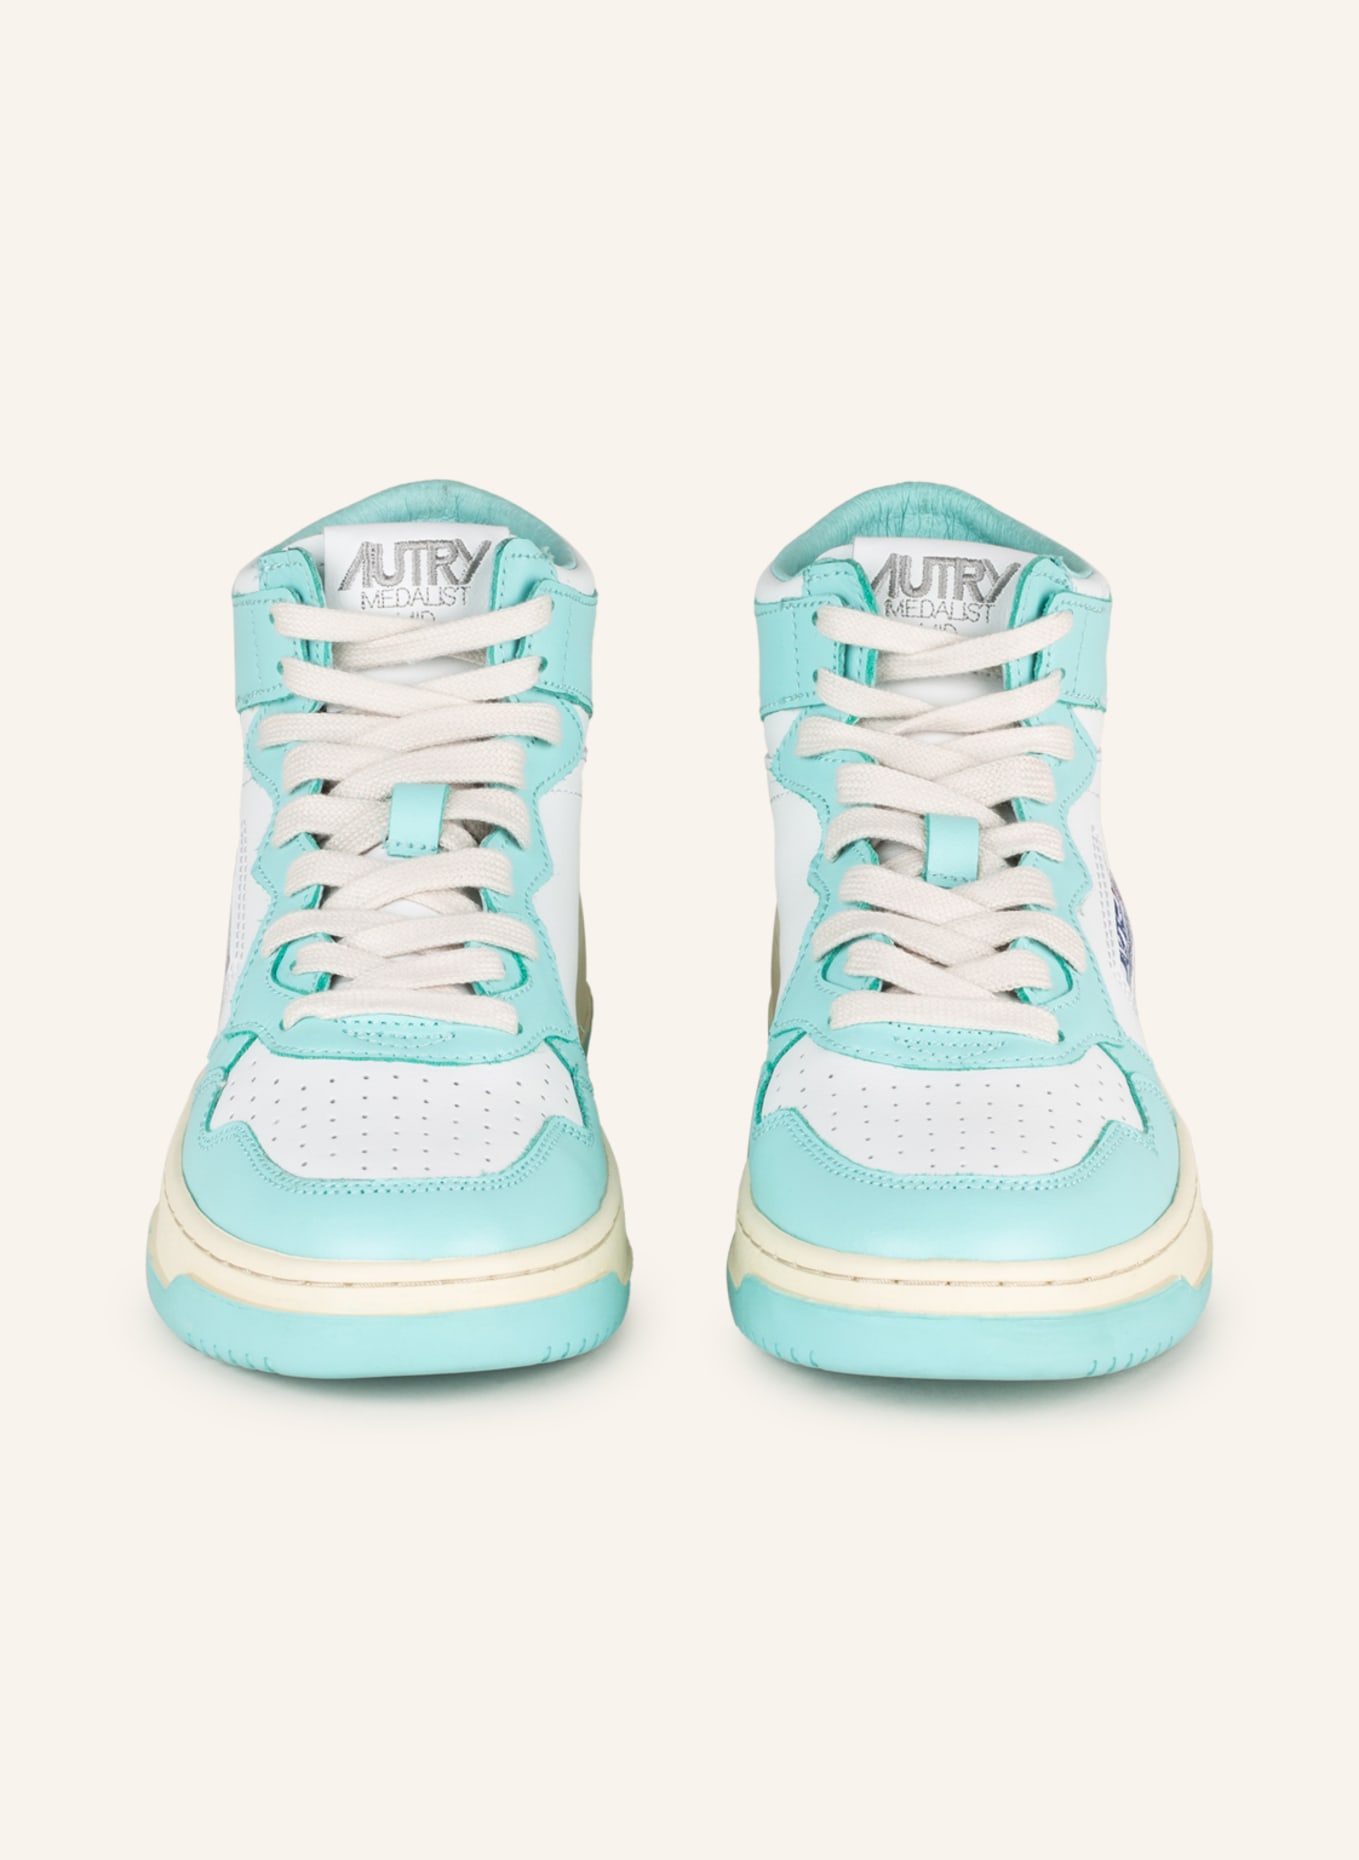 AUTRY Hightop-Sneaker MEDALIST, Farbe: WEISS/ TÜRKIS (Bild 3)